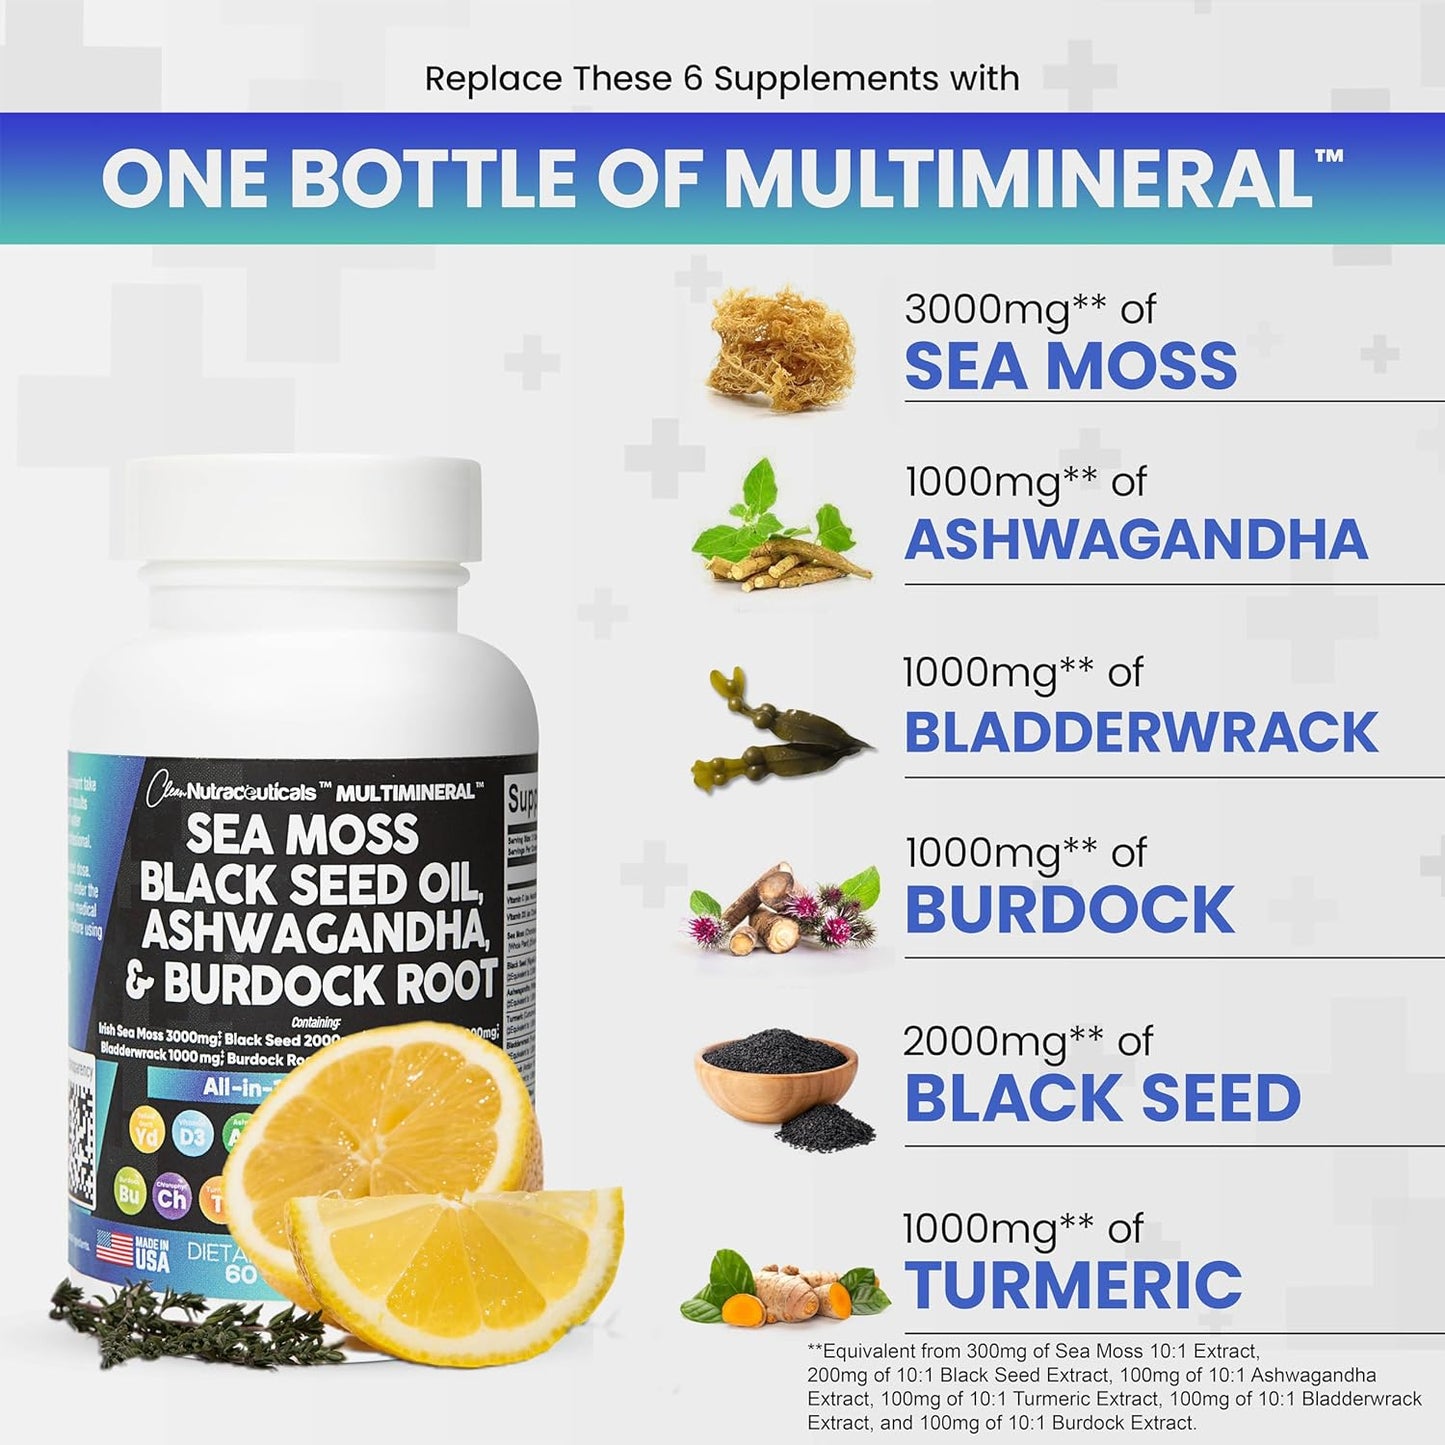 Trending Ultimate Immune Boost: Sea Moss 3000mg, Black Seed Oil 2000mg, Ashwagandha 1000mg, Turmeric 1000mg, and More!